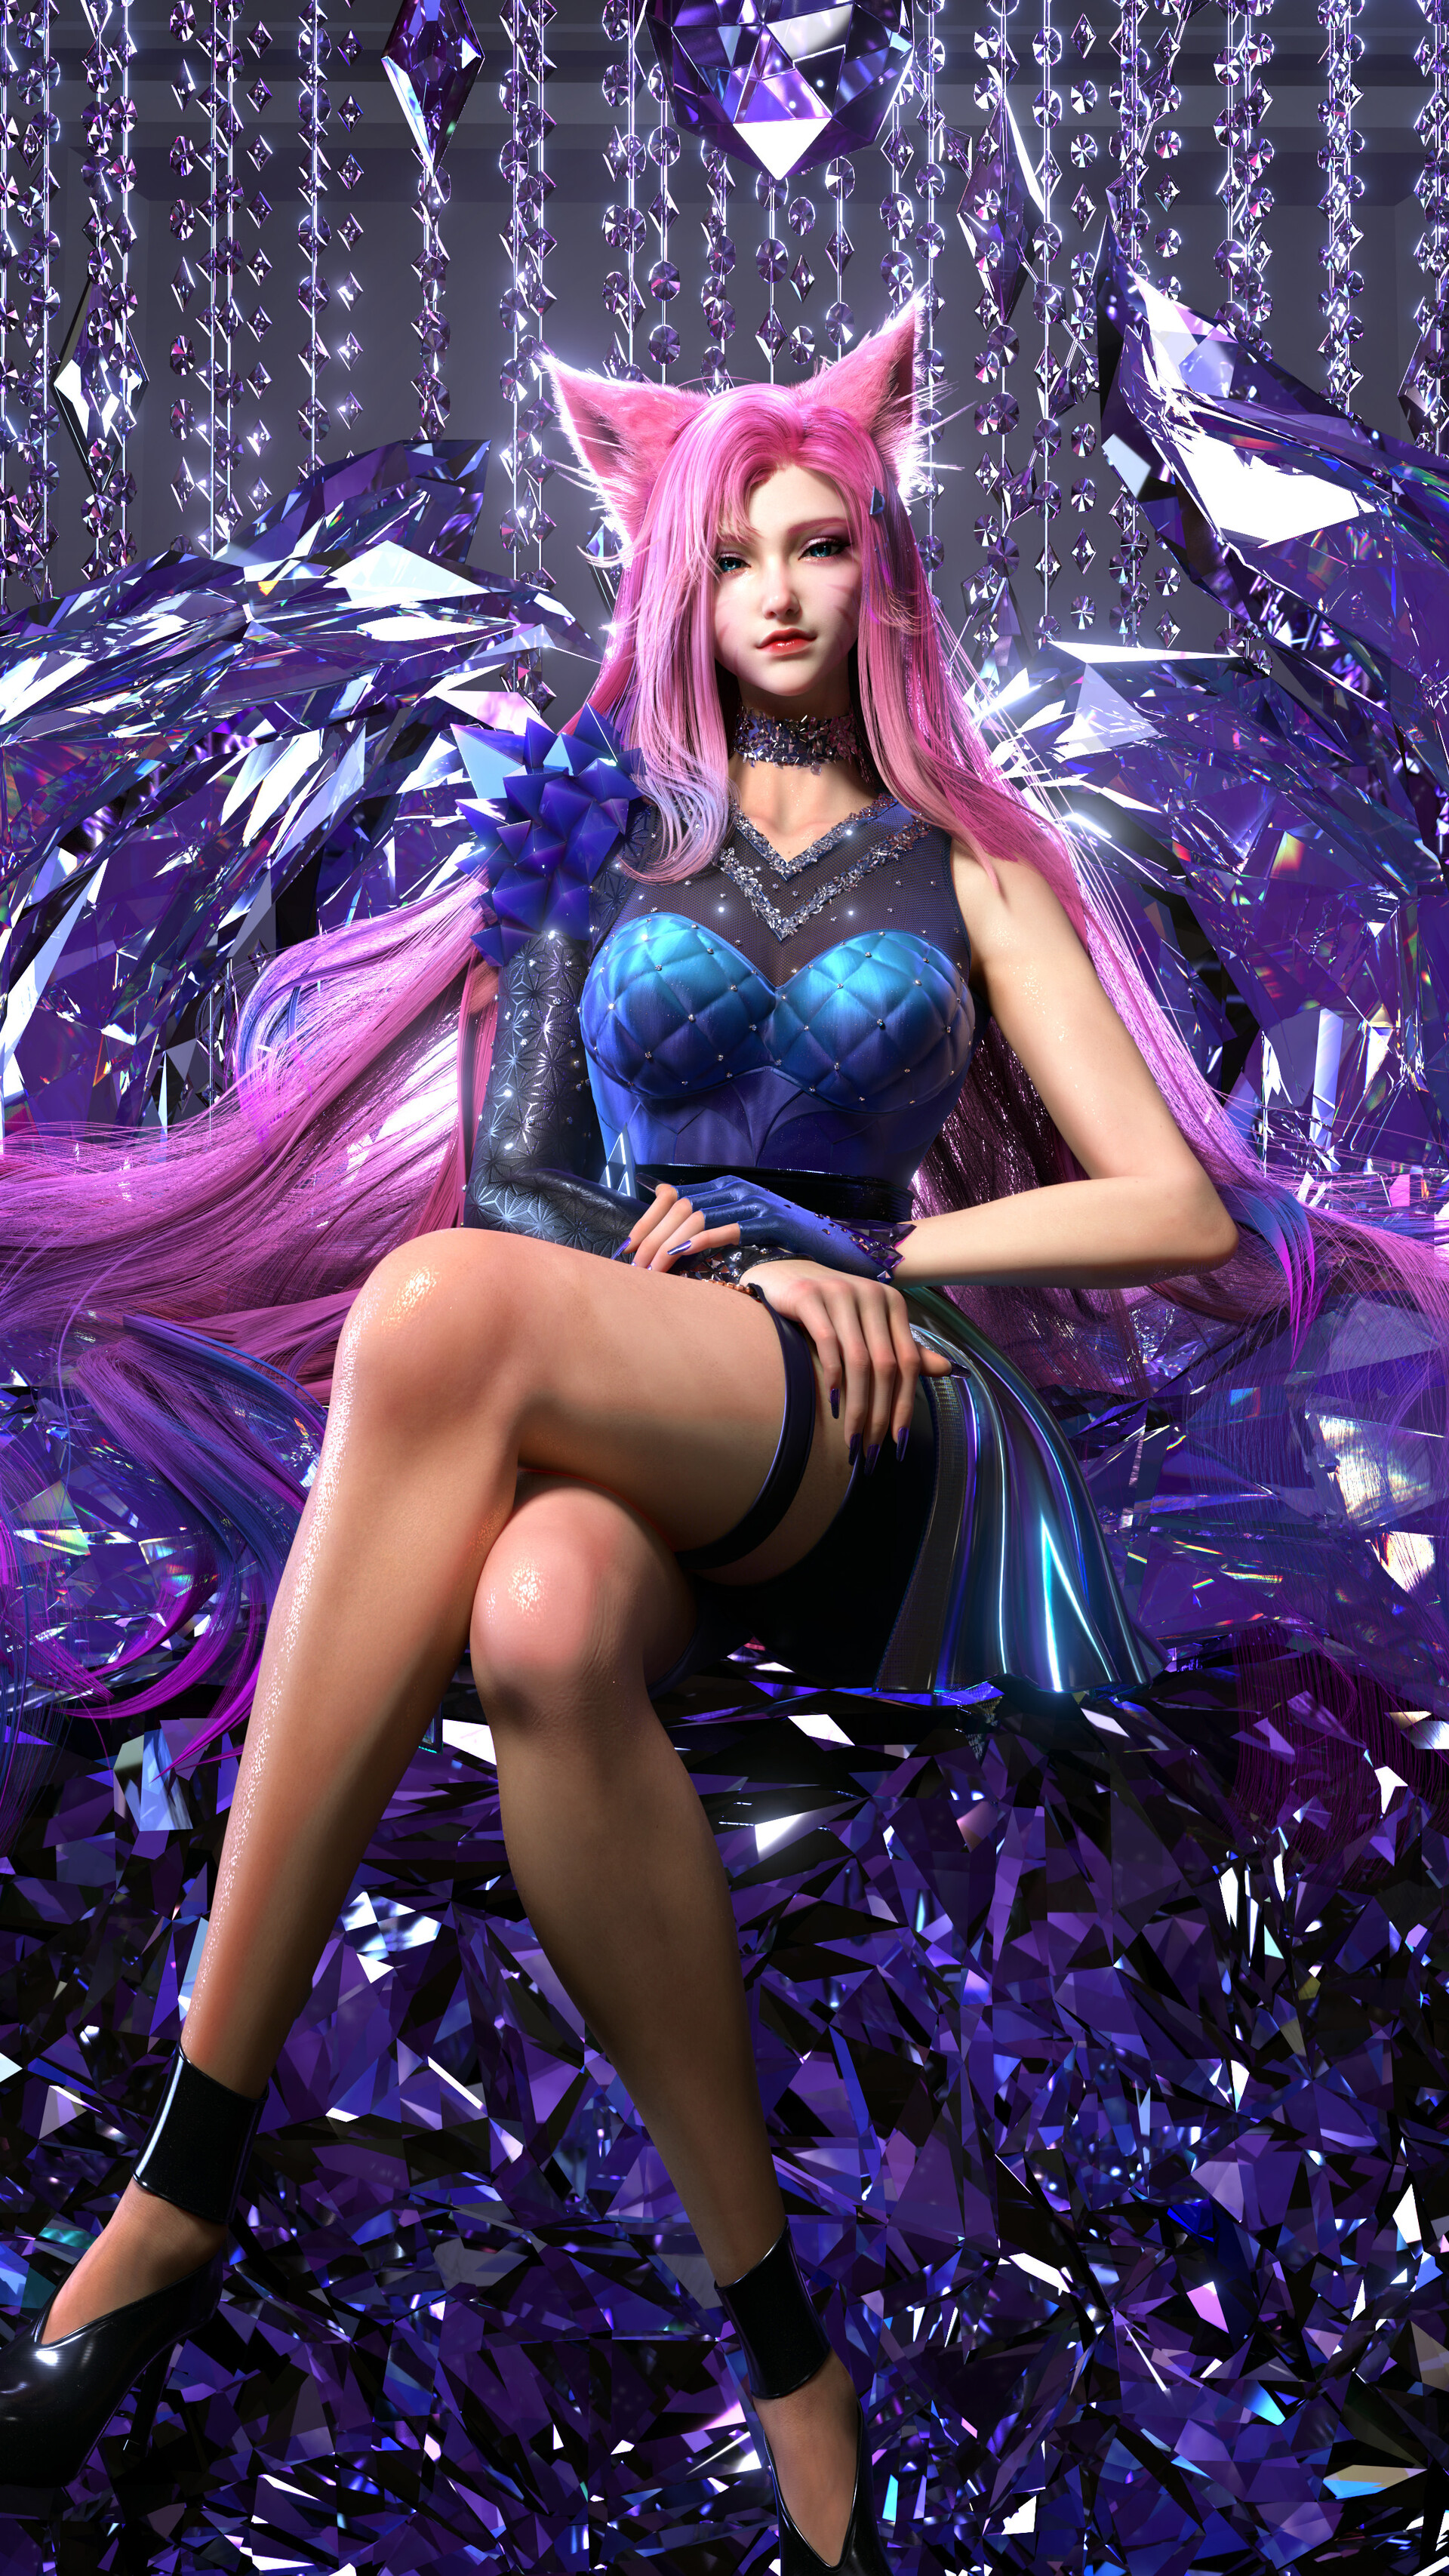 General 1920x3413 Zoey Yi CGI women Ahri (League of Legends) pink hair fox girl K/DA purple legs crossed straps gems portrait display digital art